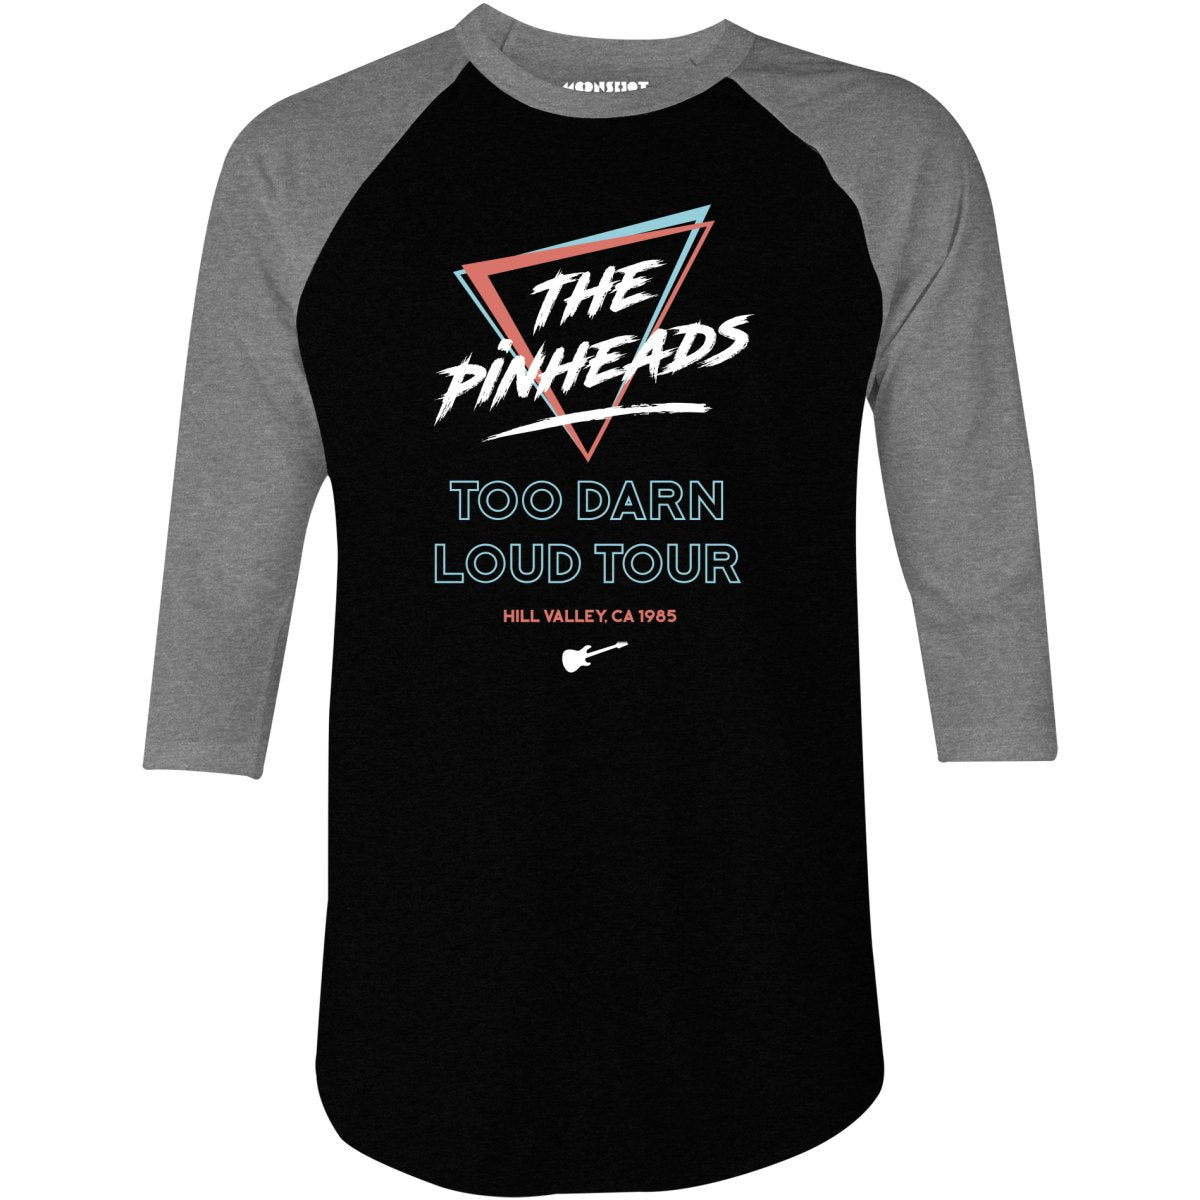 The Pinheads - Too Darn Loud Tour - 3/4 Sleeve Raglan T-Shirt